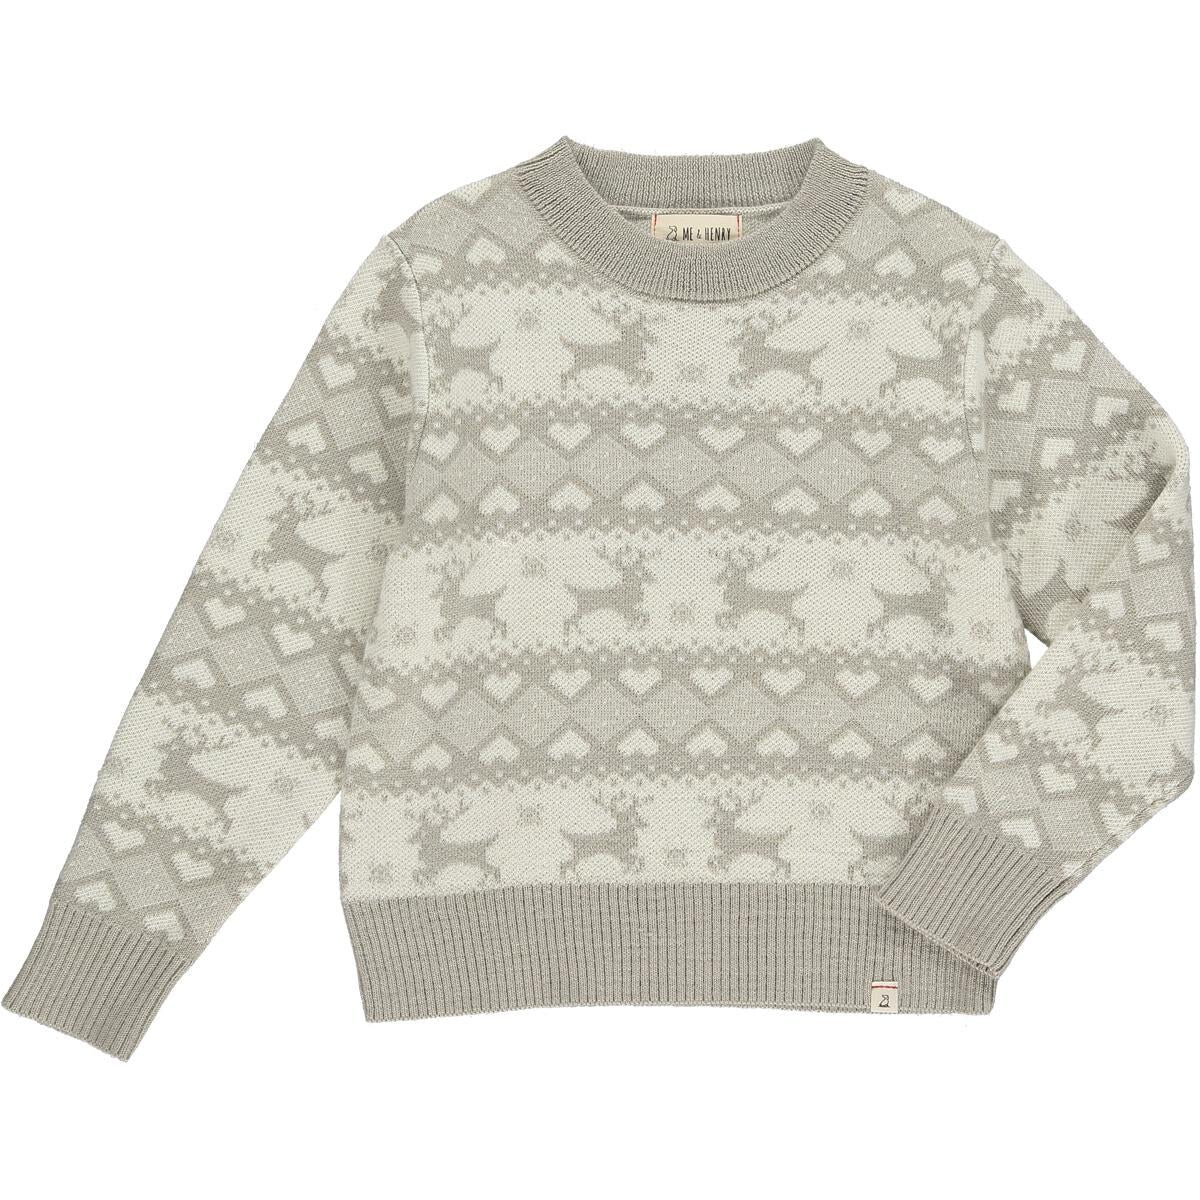 osolo grey/white sweater